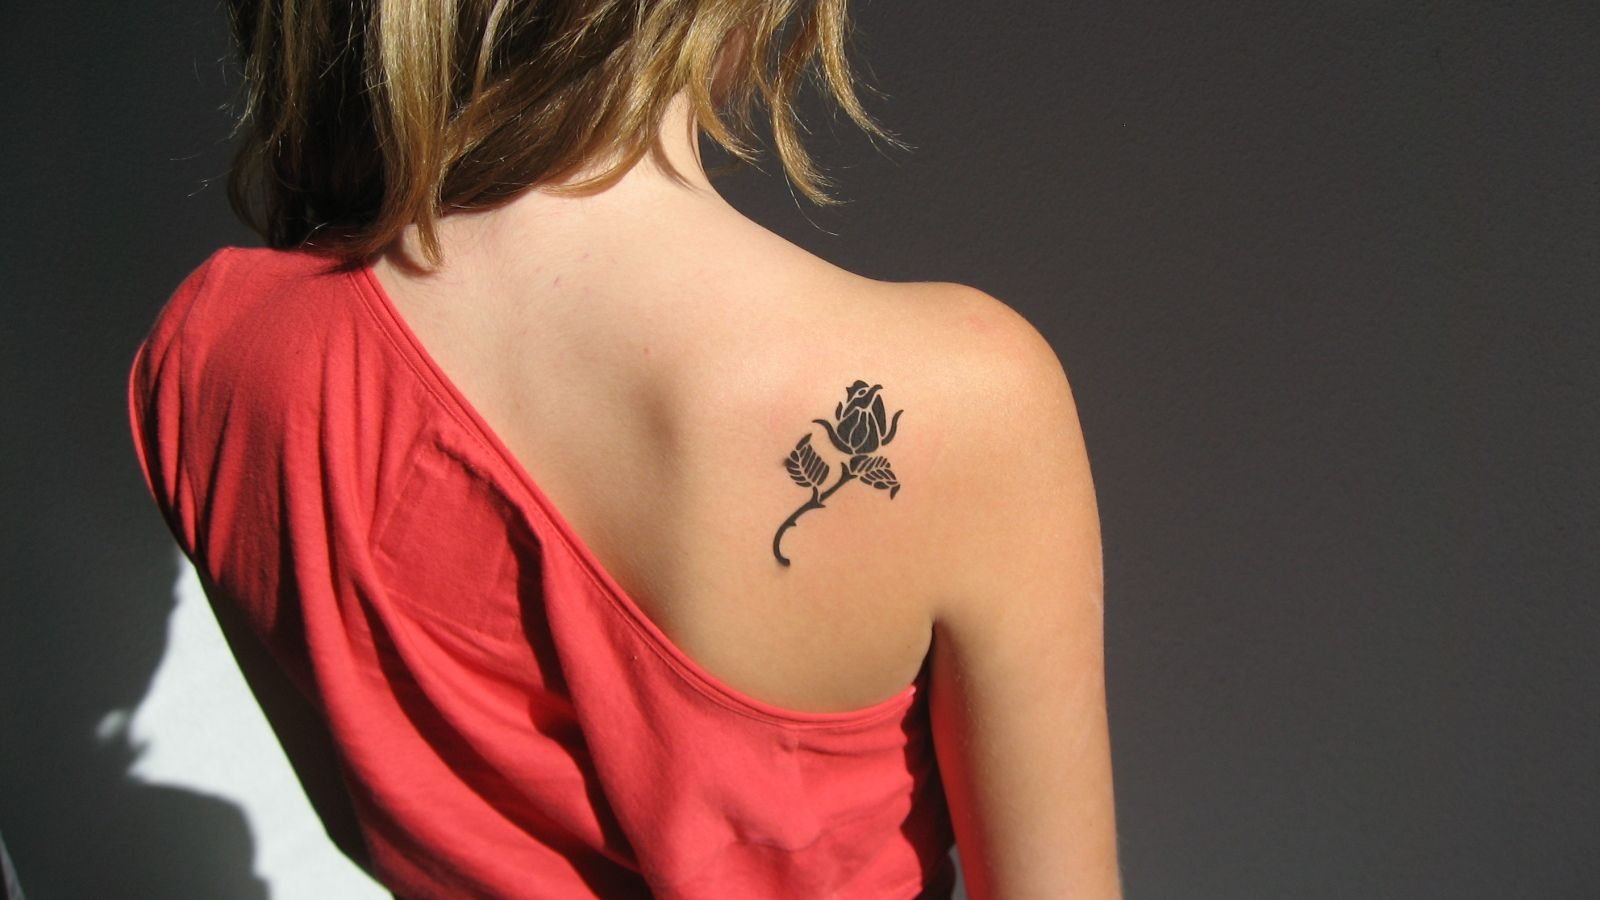 Back Shoulder Black Small Flower Tattoos Designs Tattoos in dimensions 1600 X 900